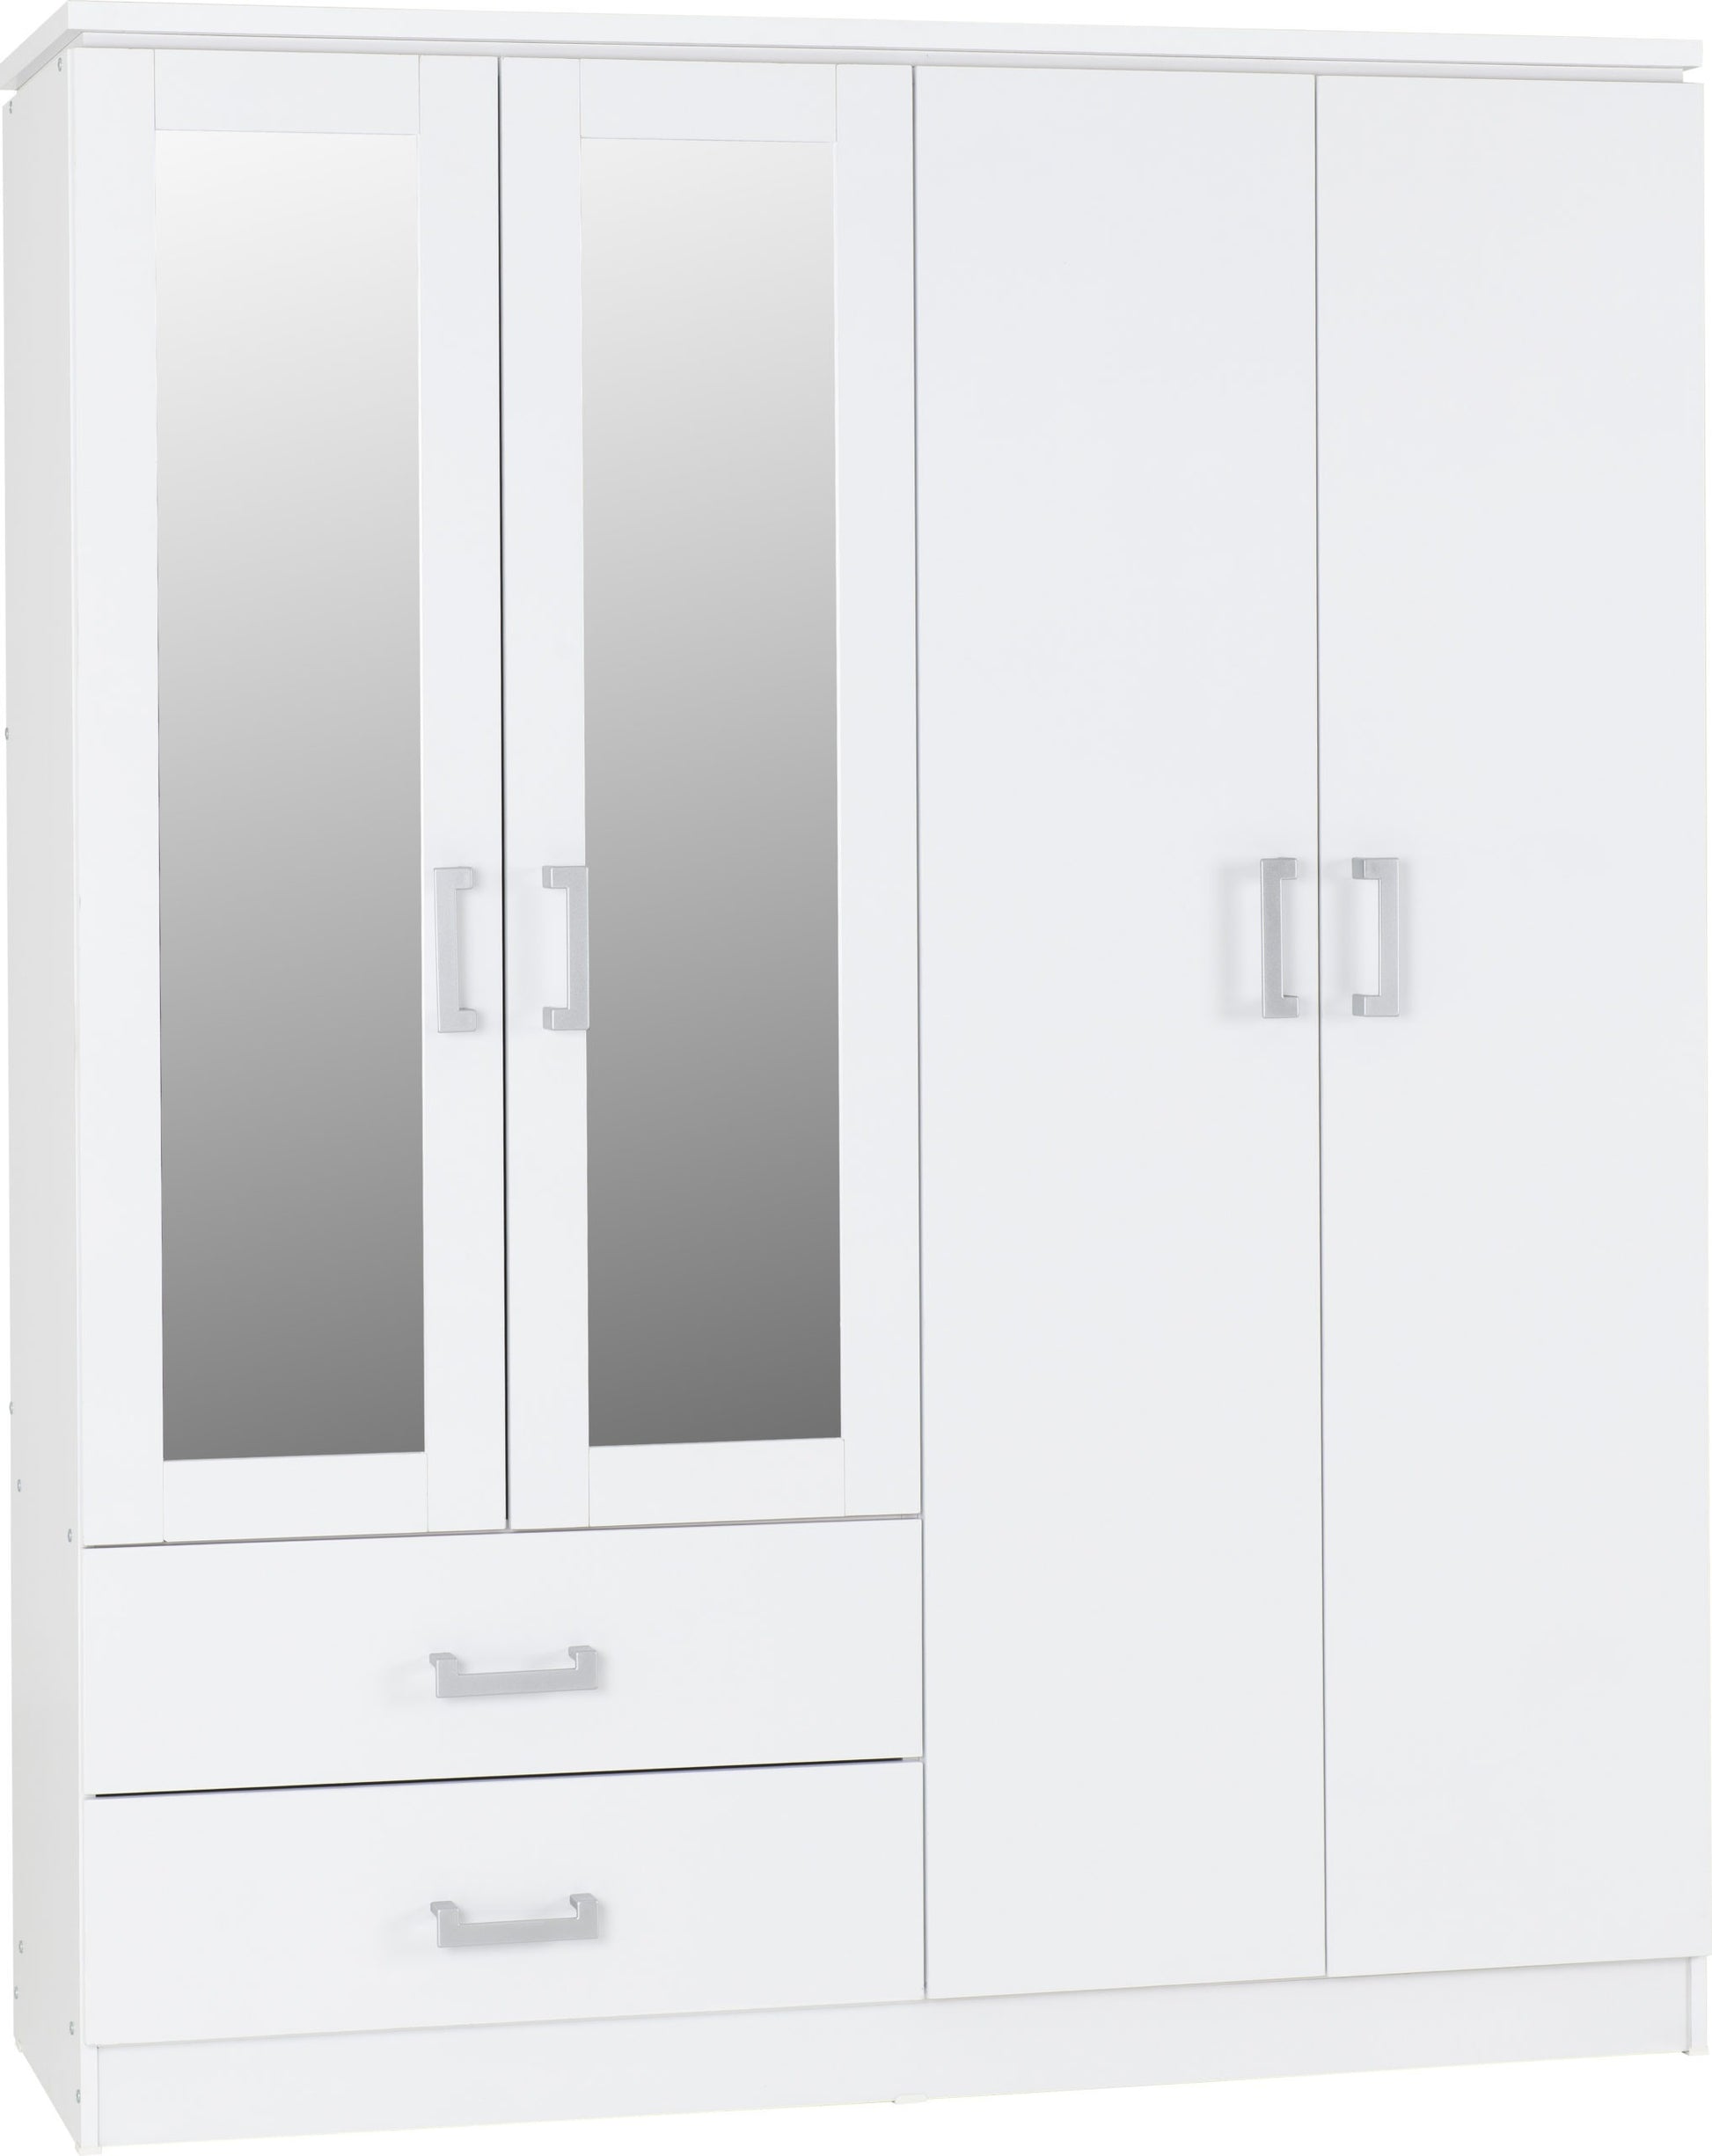 Charles 4 Door 2 Drawer Mirrored Wardrobe - White - The Right Buy Store